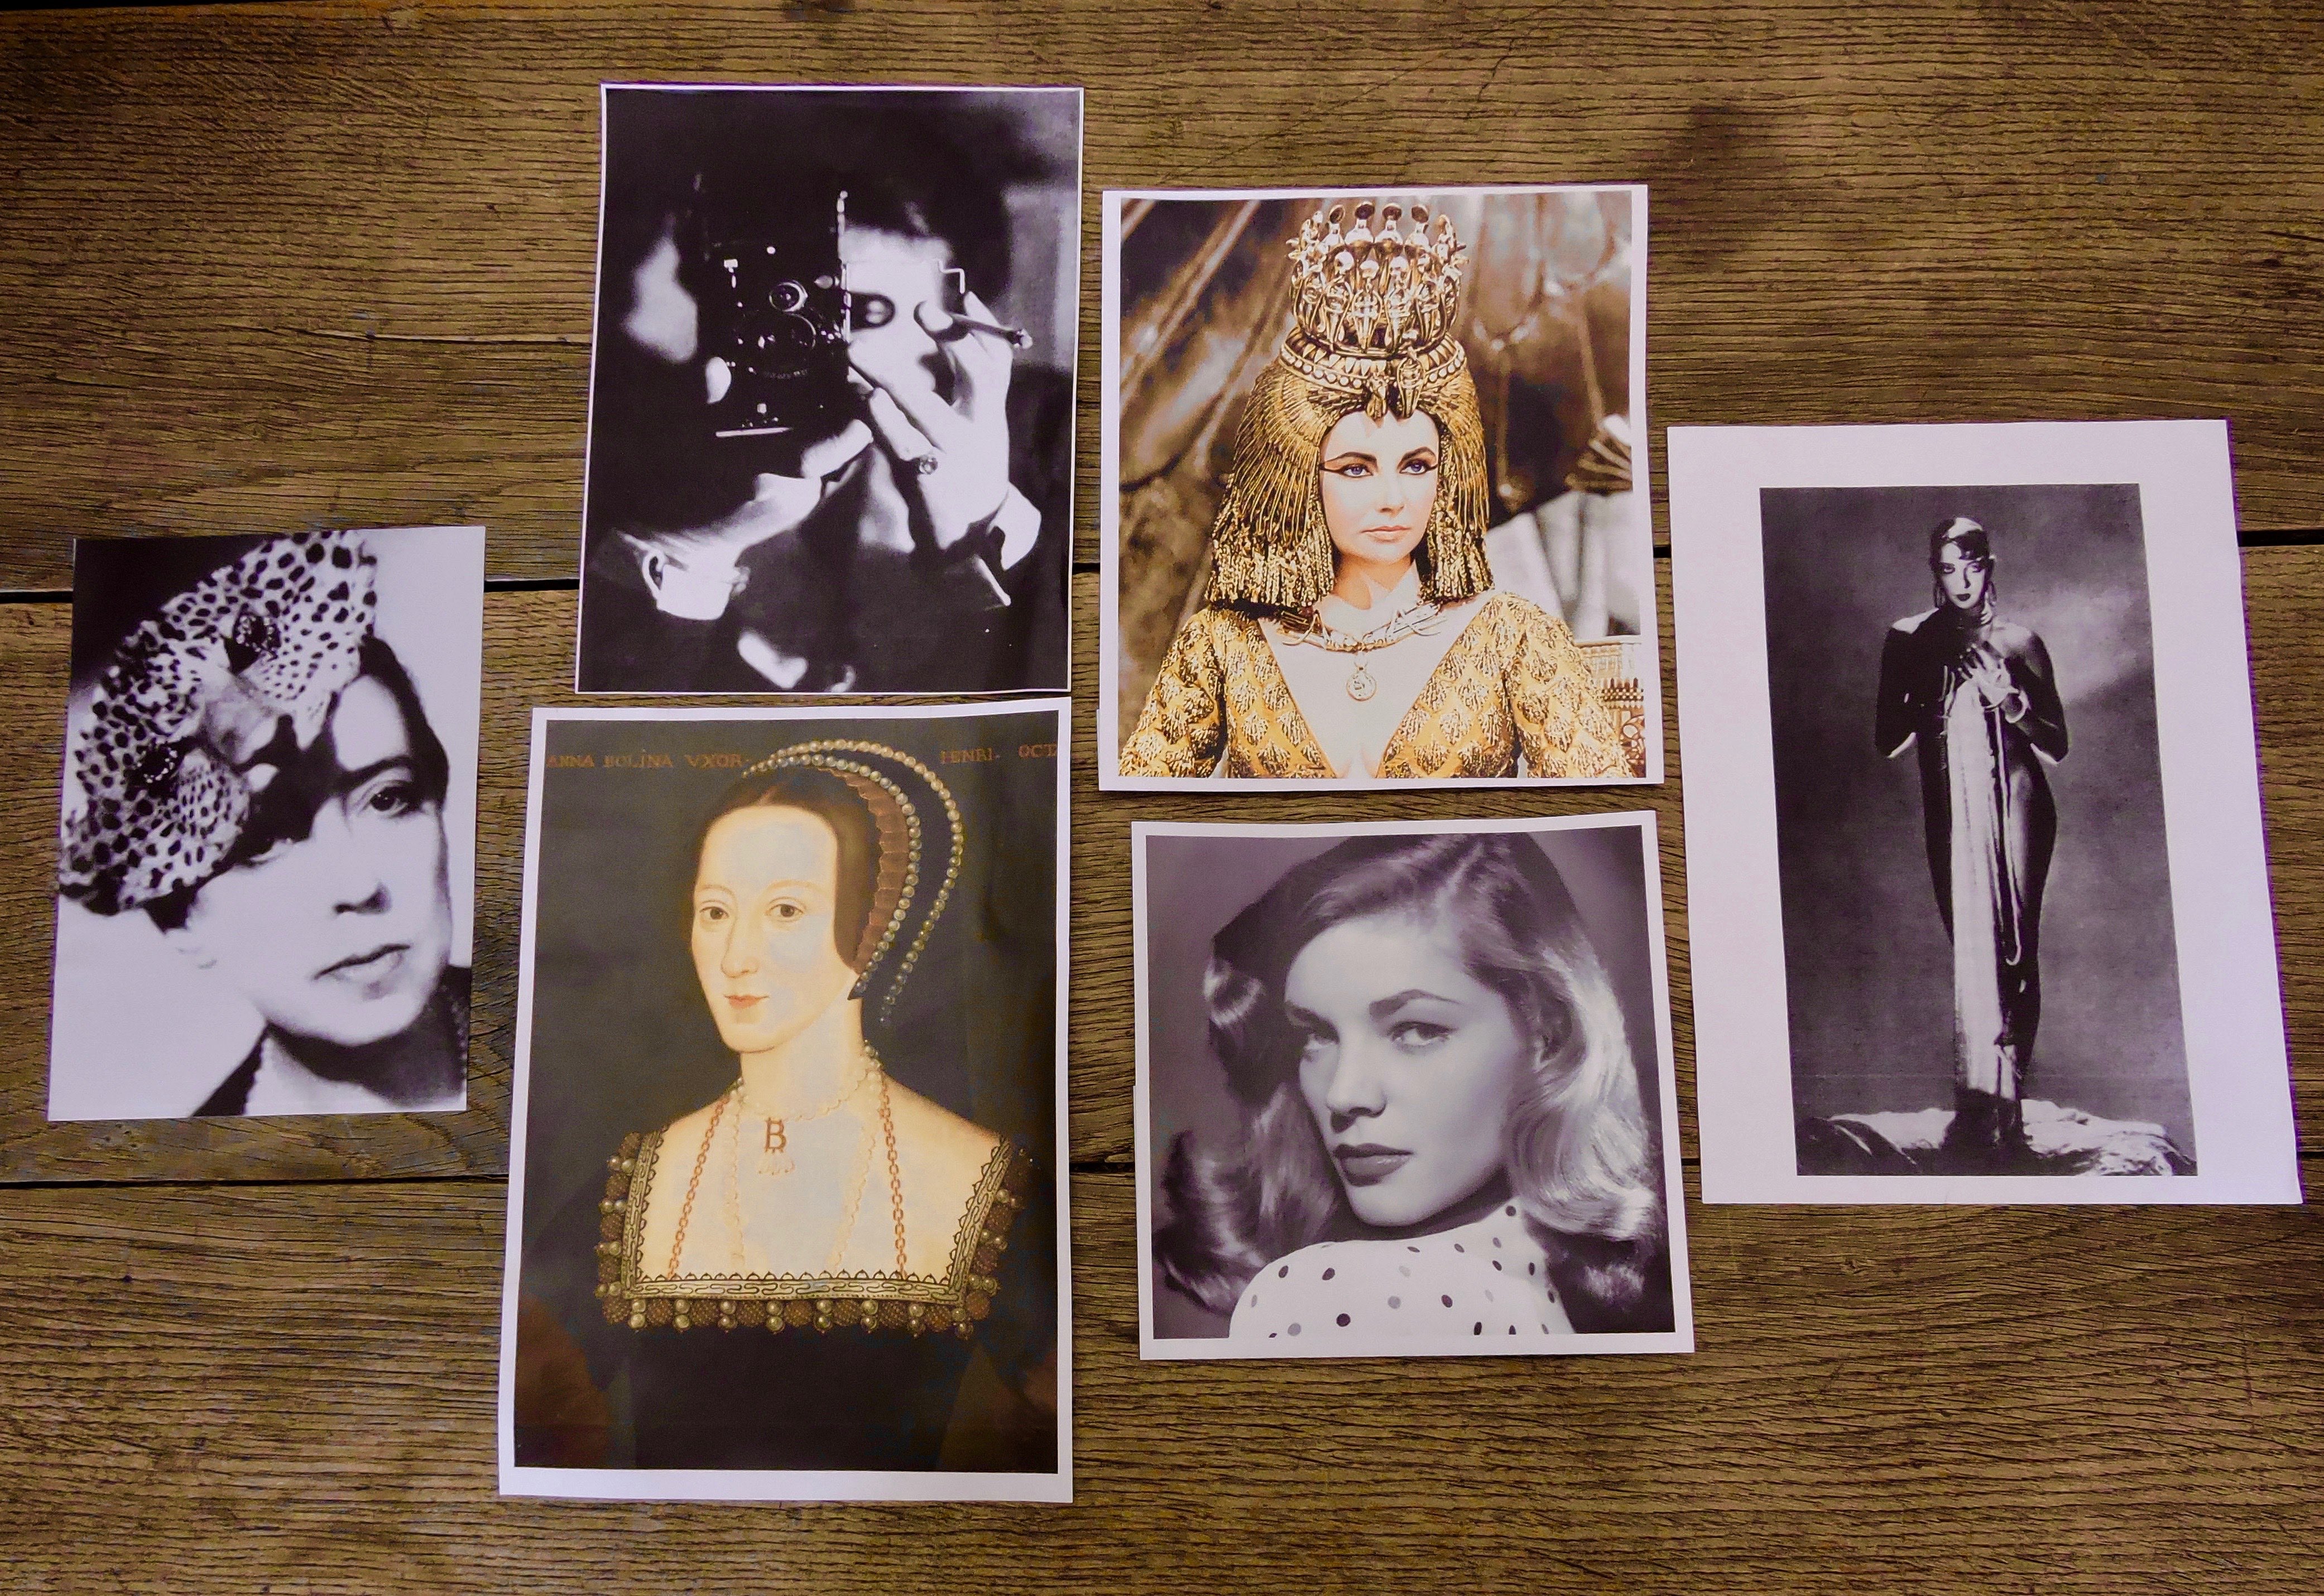 From left to right: Elsa Schiaparelli, Germaine Krull, Elizabeth Taylor as Cleopatra, Katherine Hepburn and Josephine Baker